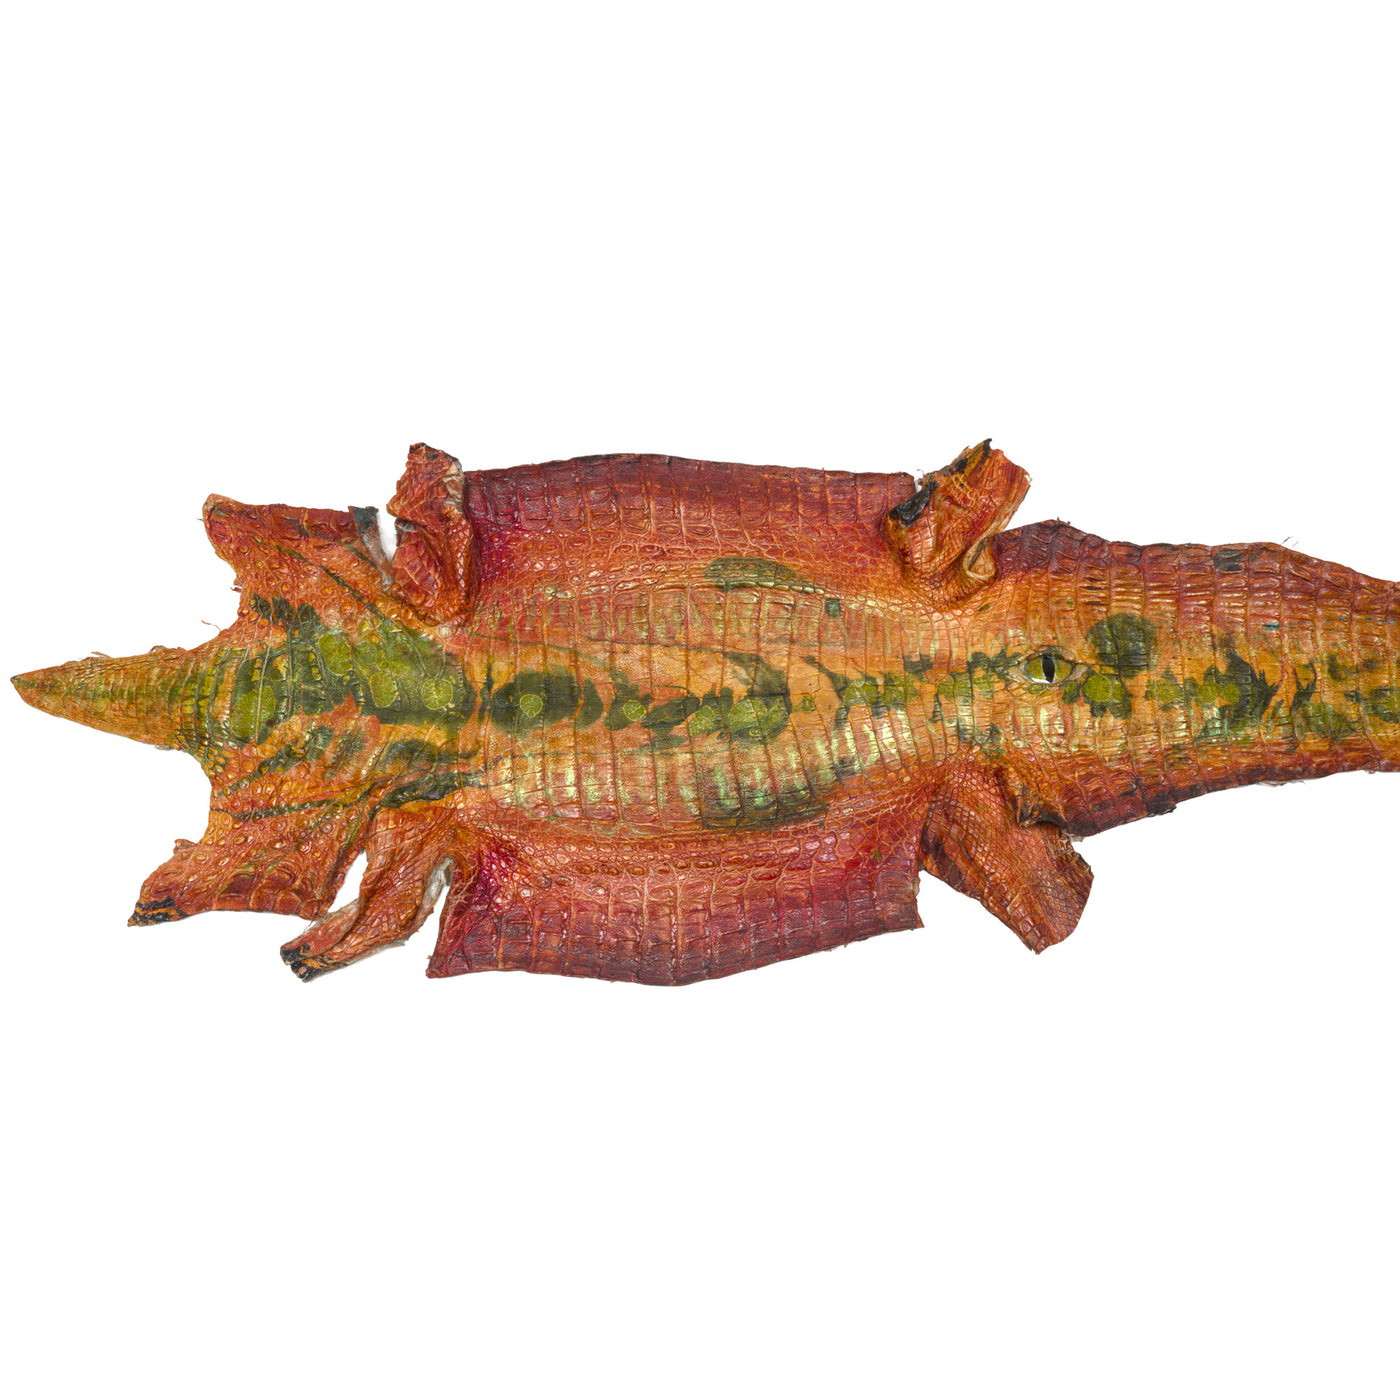 Alligator skin art